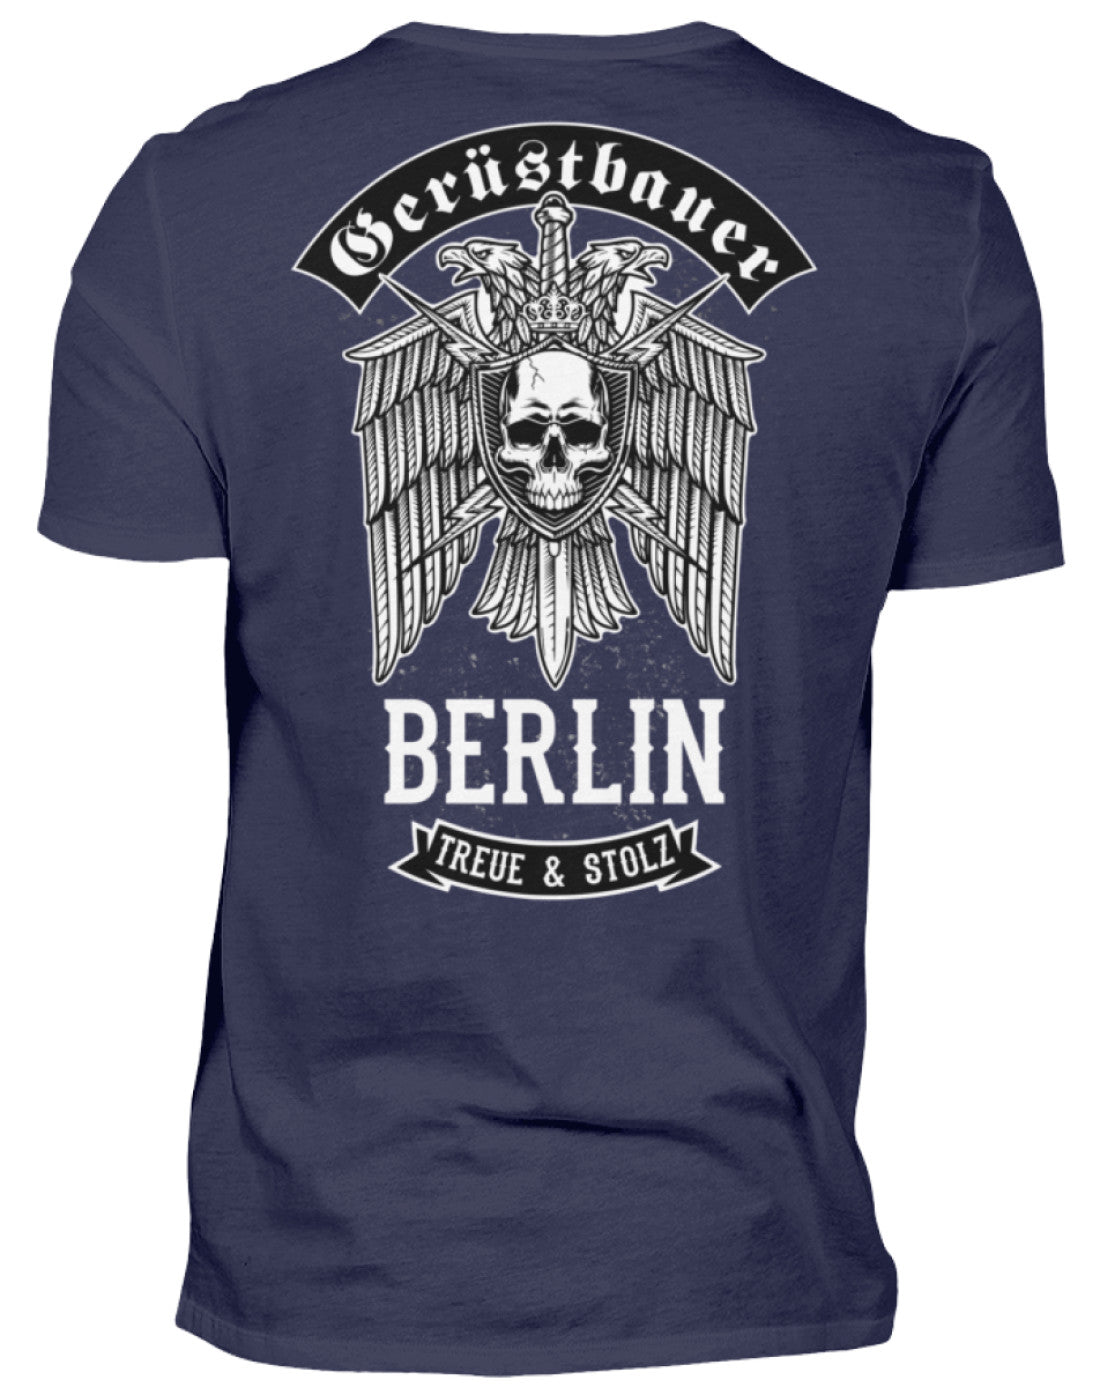 Gerüstbauer Berlin  - Herren Shirt €22.95 Gerüstbauer - Shop >>